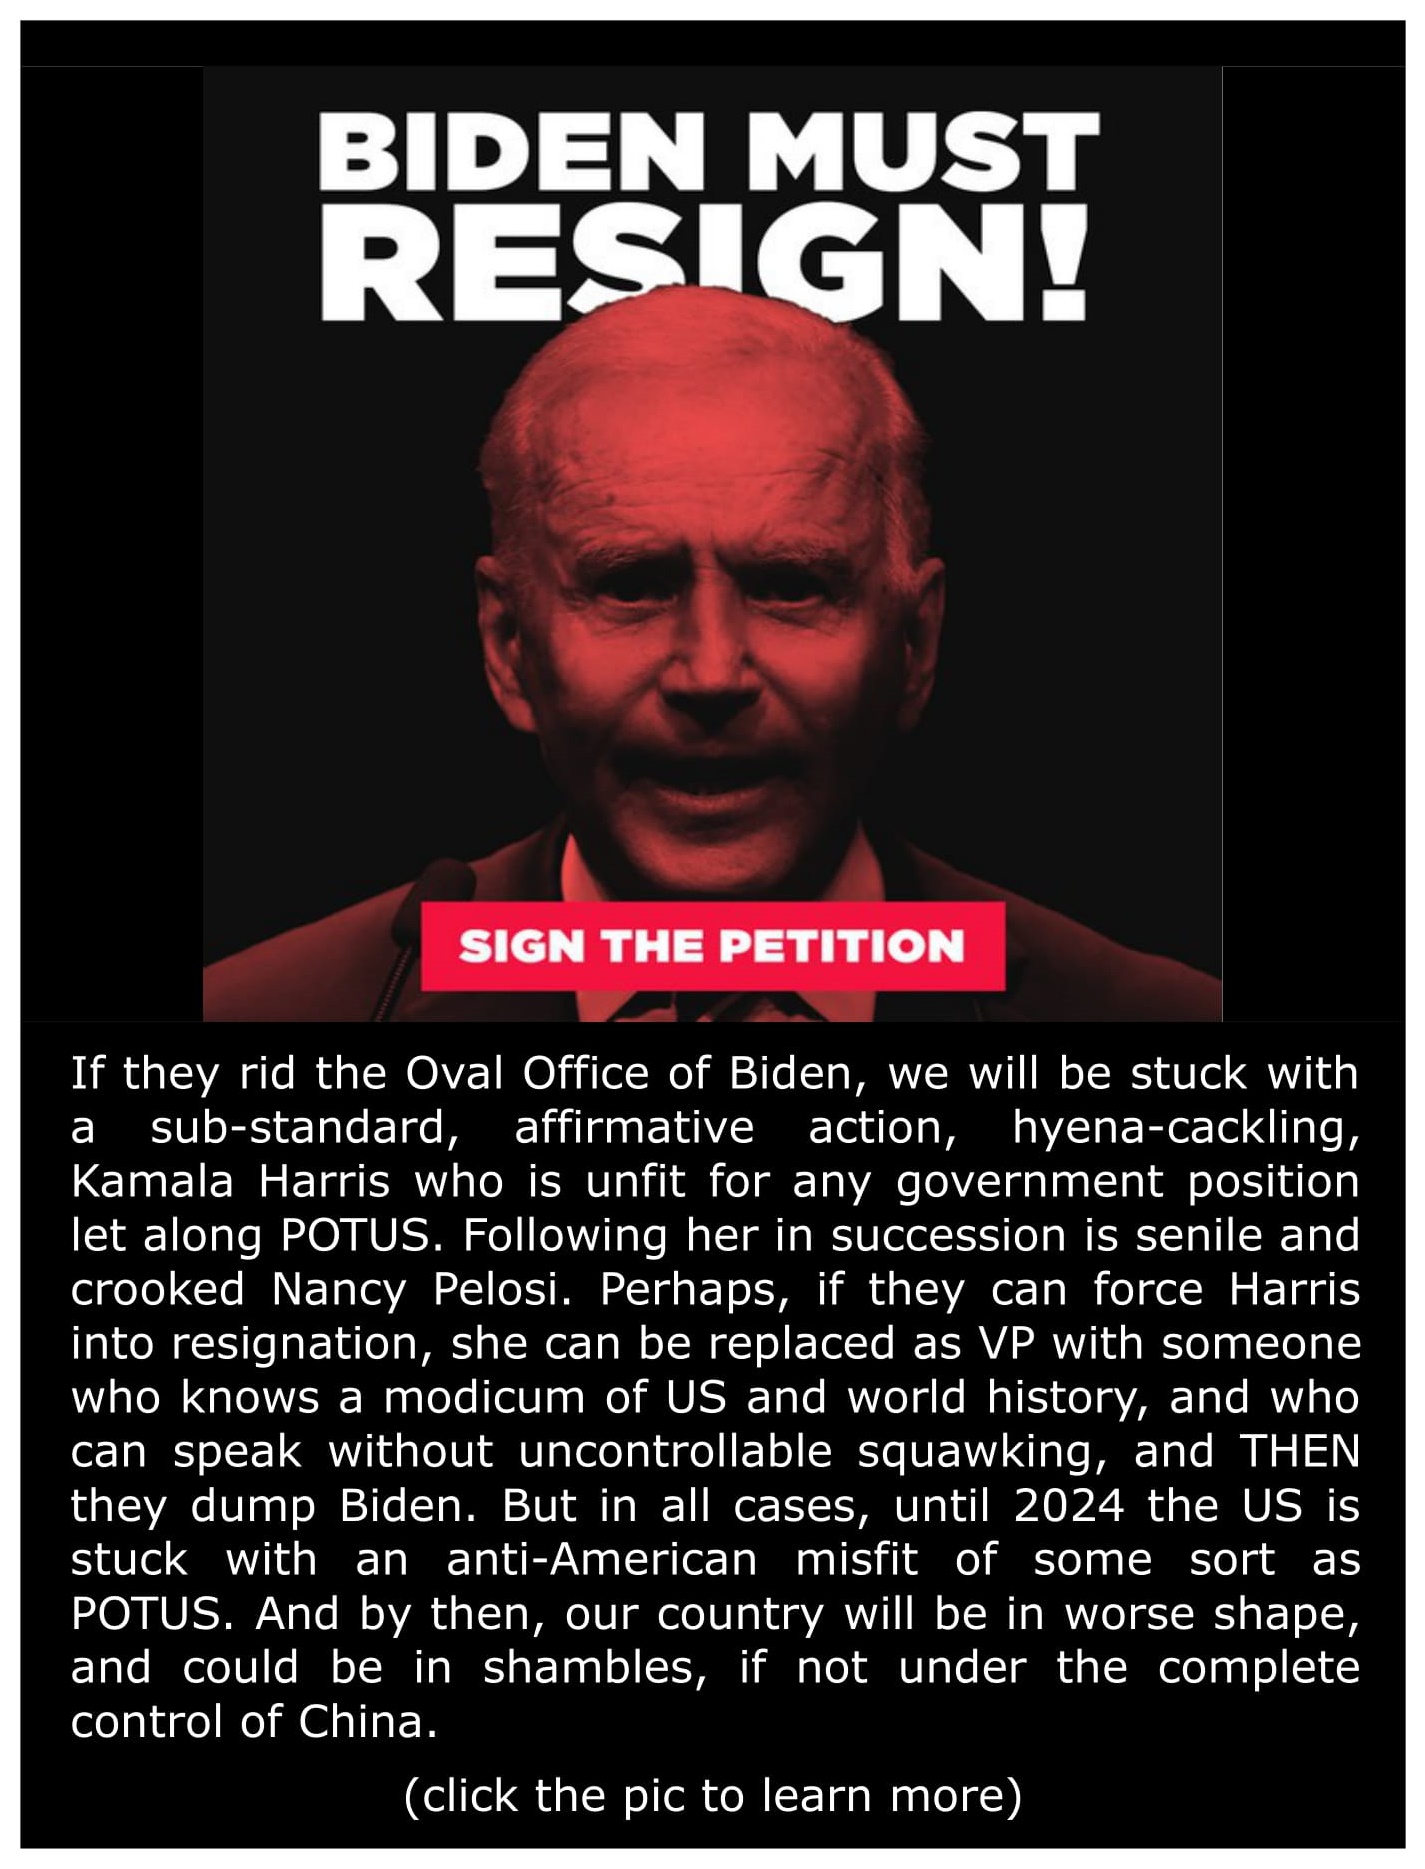 Petition for Biden Resignation